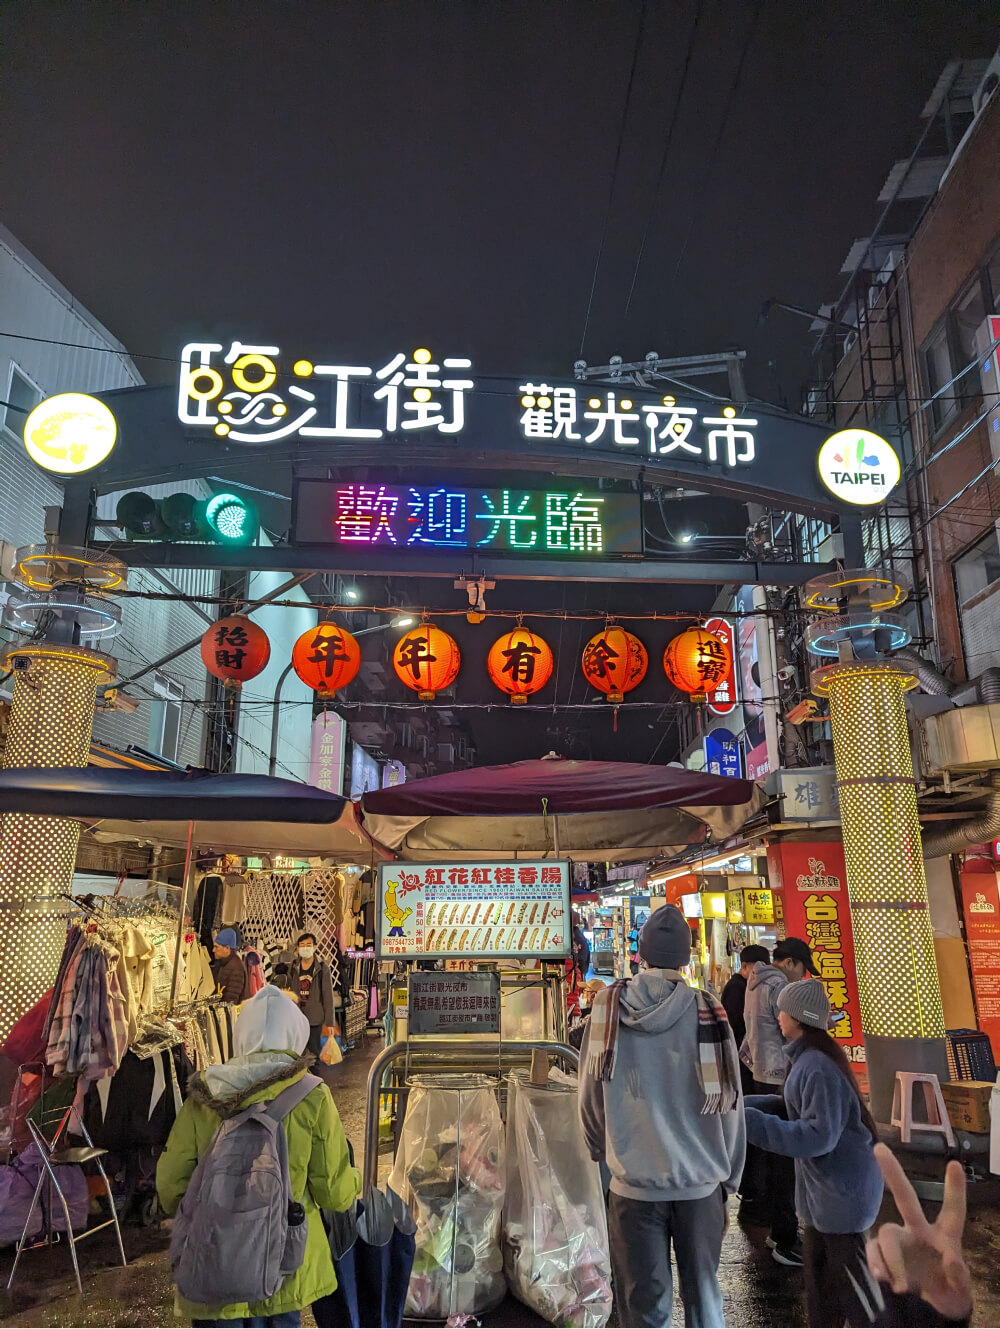 Entrance of a taipei night market